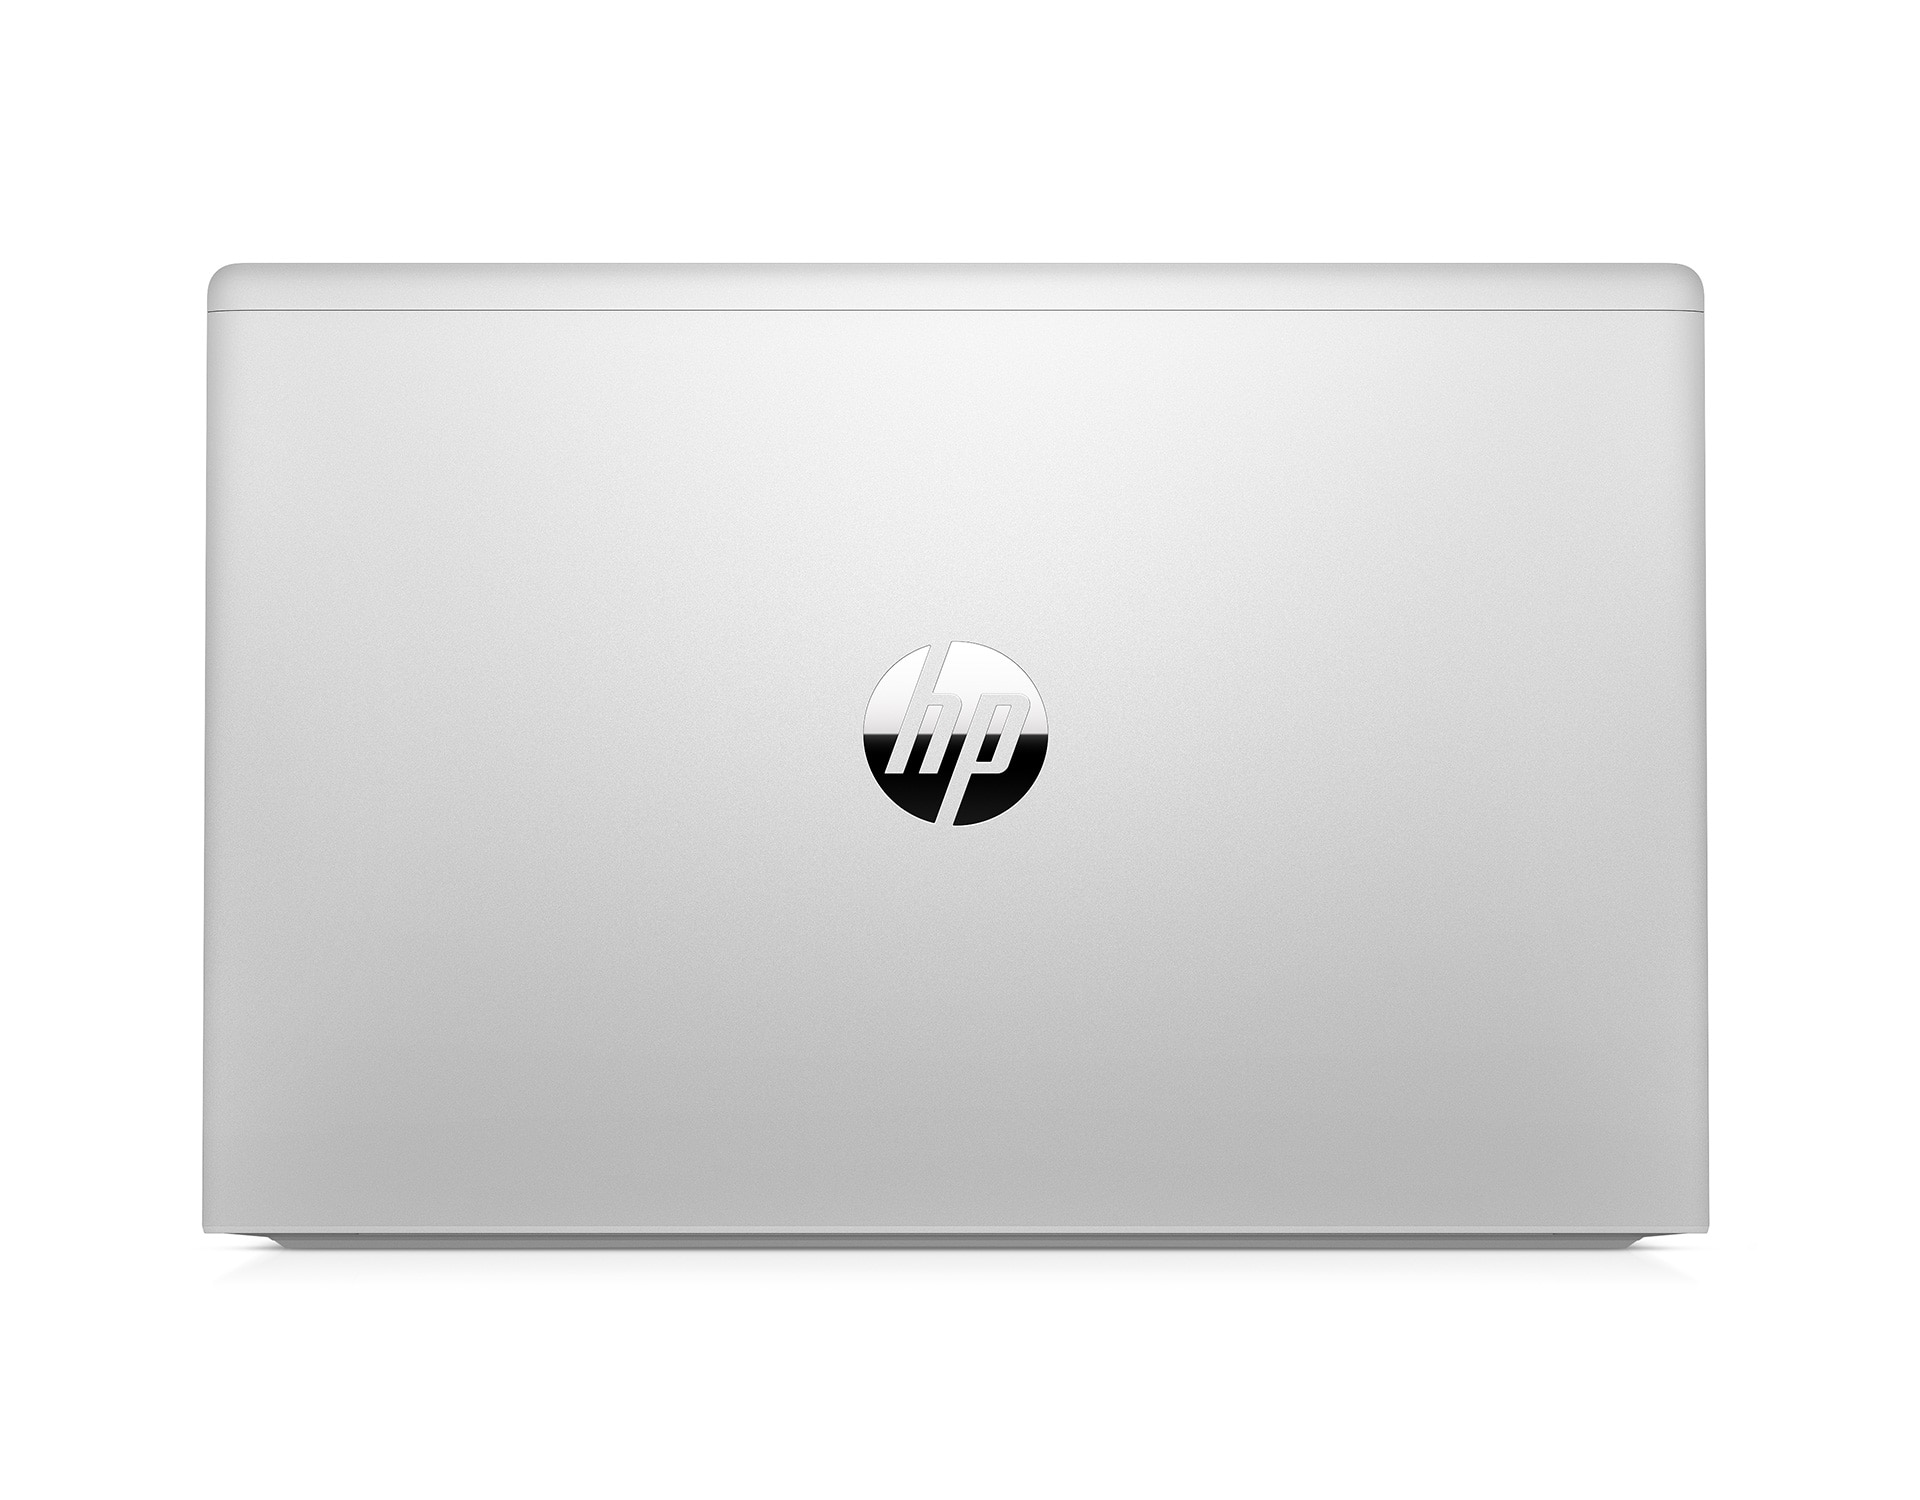 定形外発送送料無料商品 HP ProBook 650 G1/i7-4700/8G/SSD275/フルHD